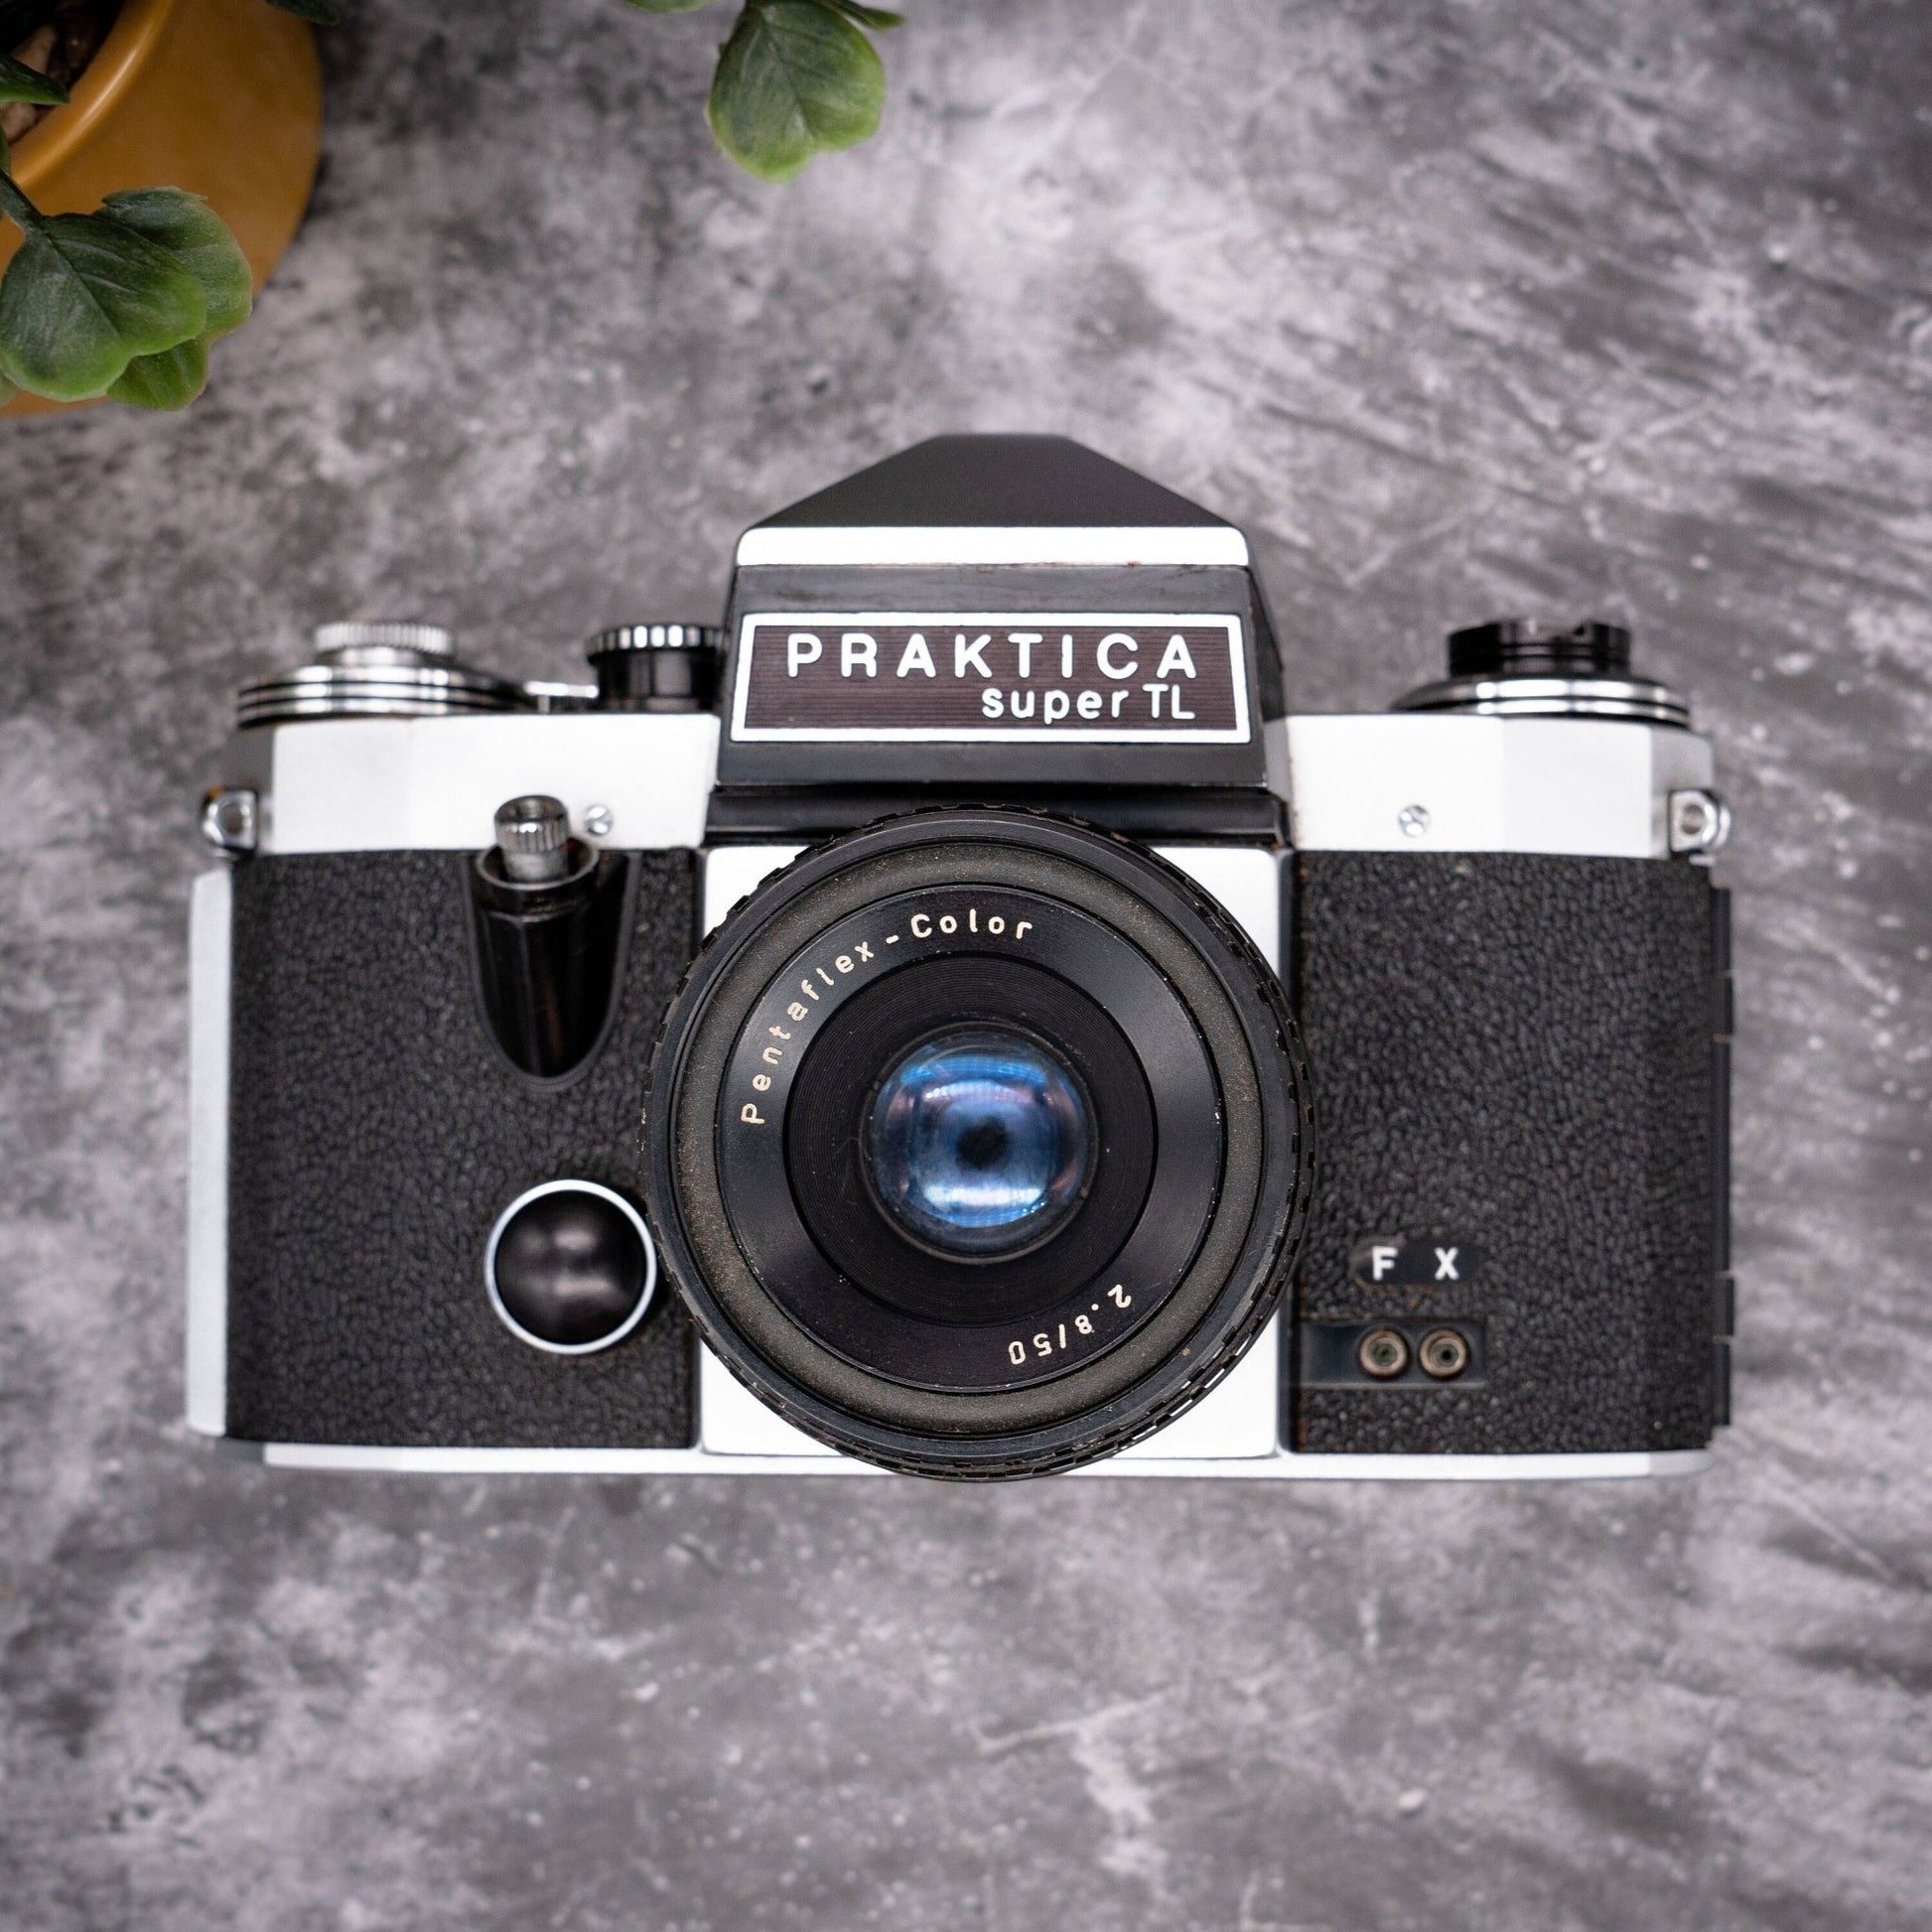 35mm Film Camera Kit | Praktica Super TL + 50mm f/2.8 Lens, Roll Of Expired Film - Expired Film Club